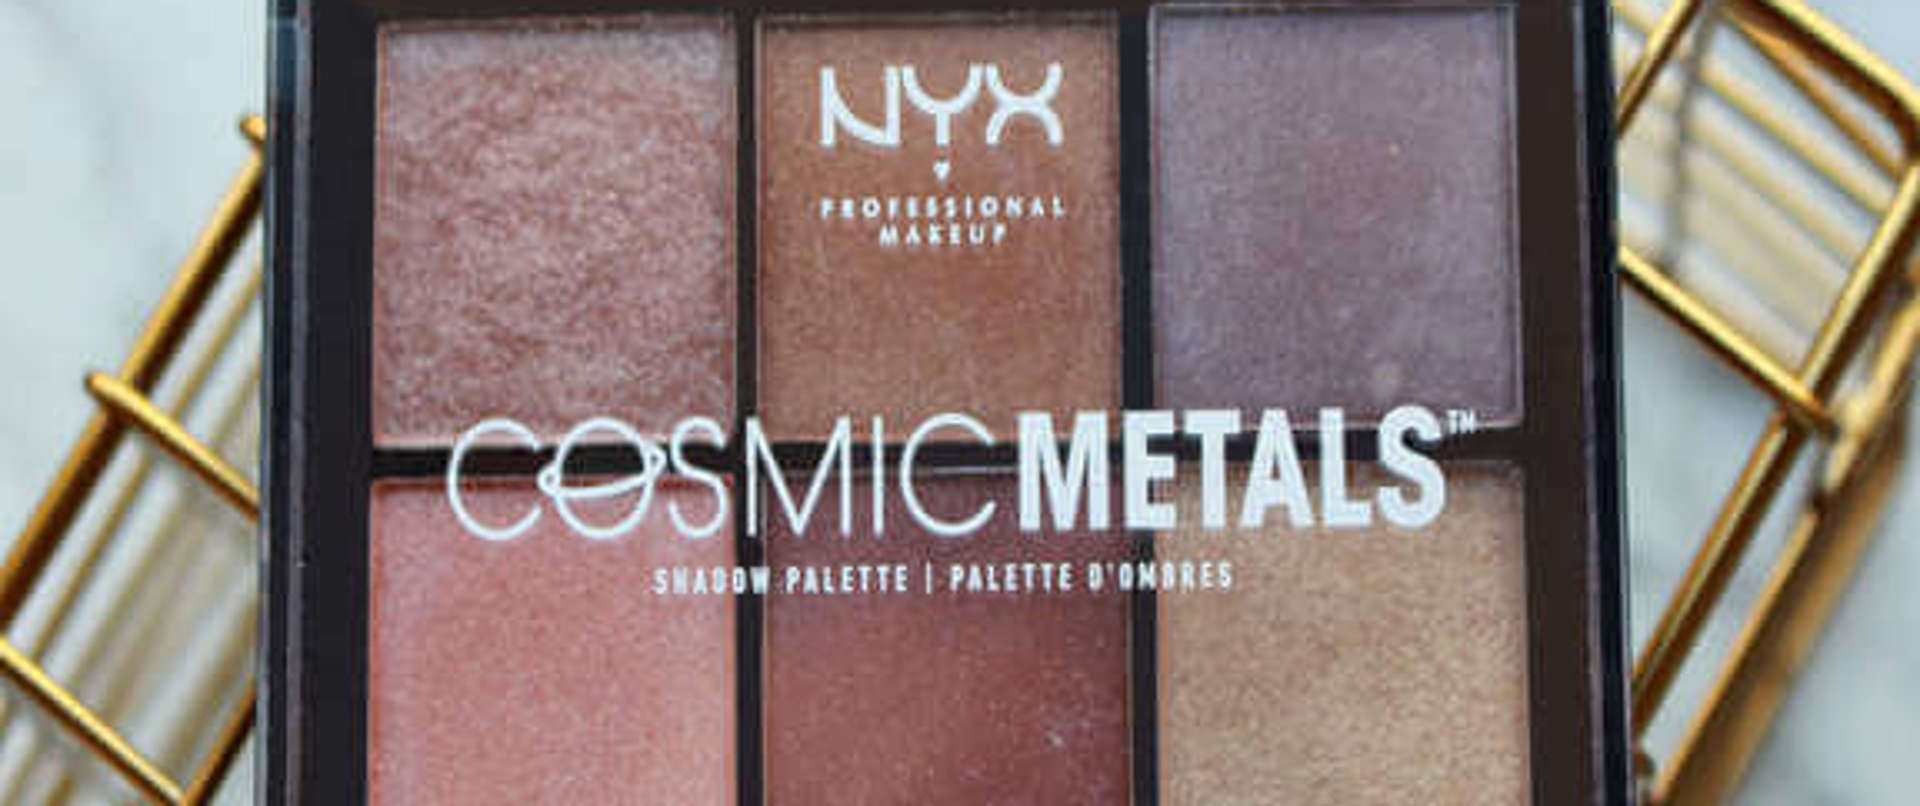 Deniyoruz: NYX Professional Makeup Cosmic Metals ile Metalik Makyaj